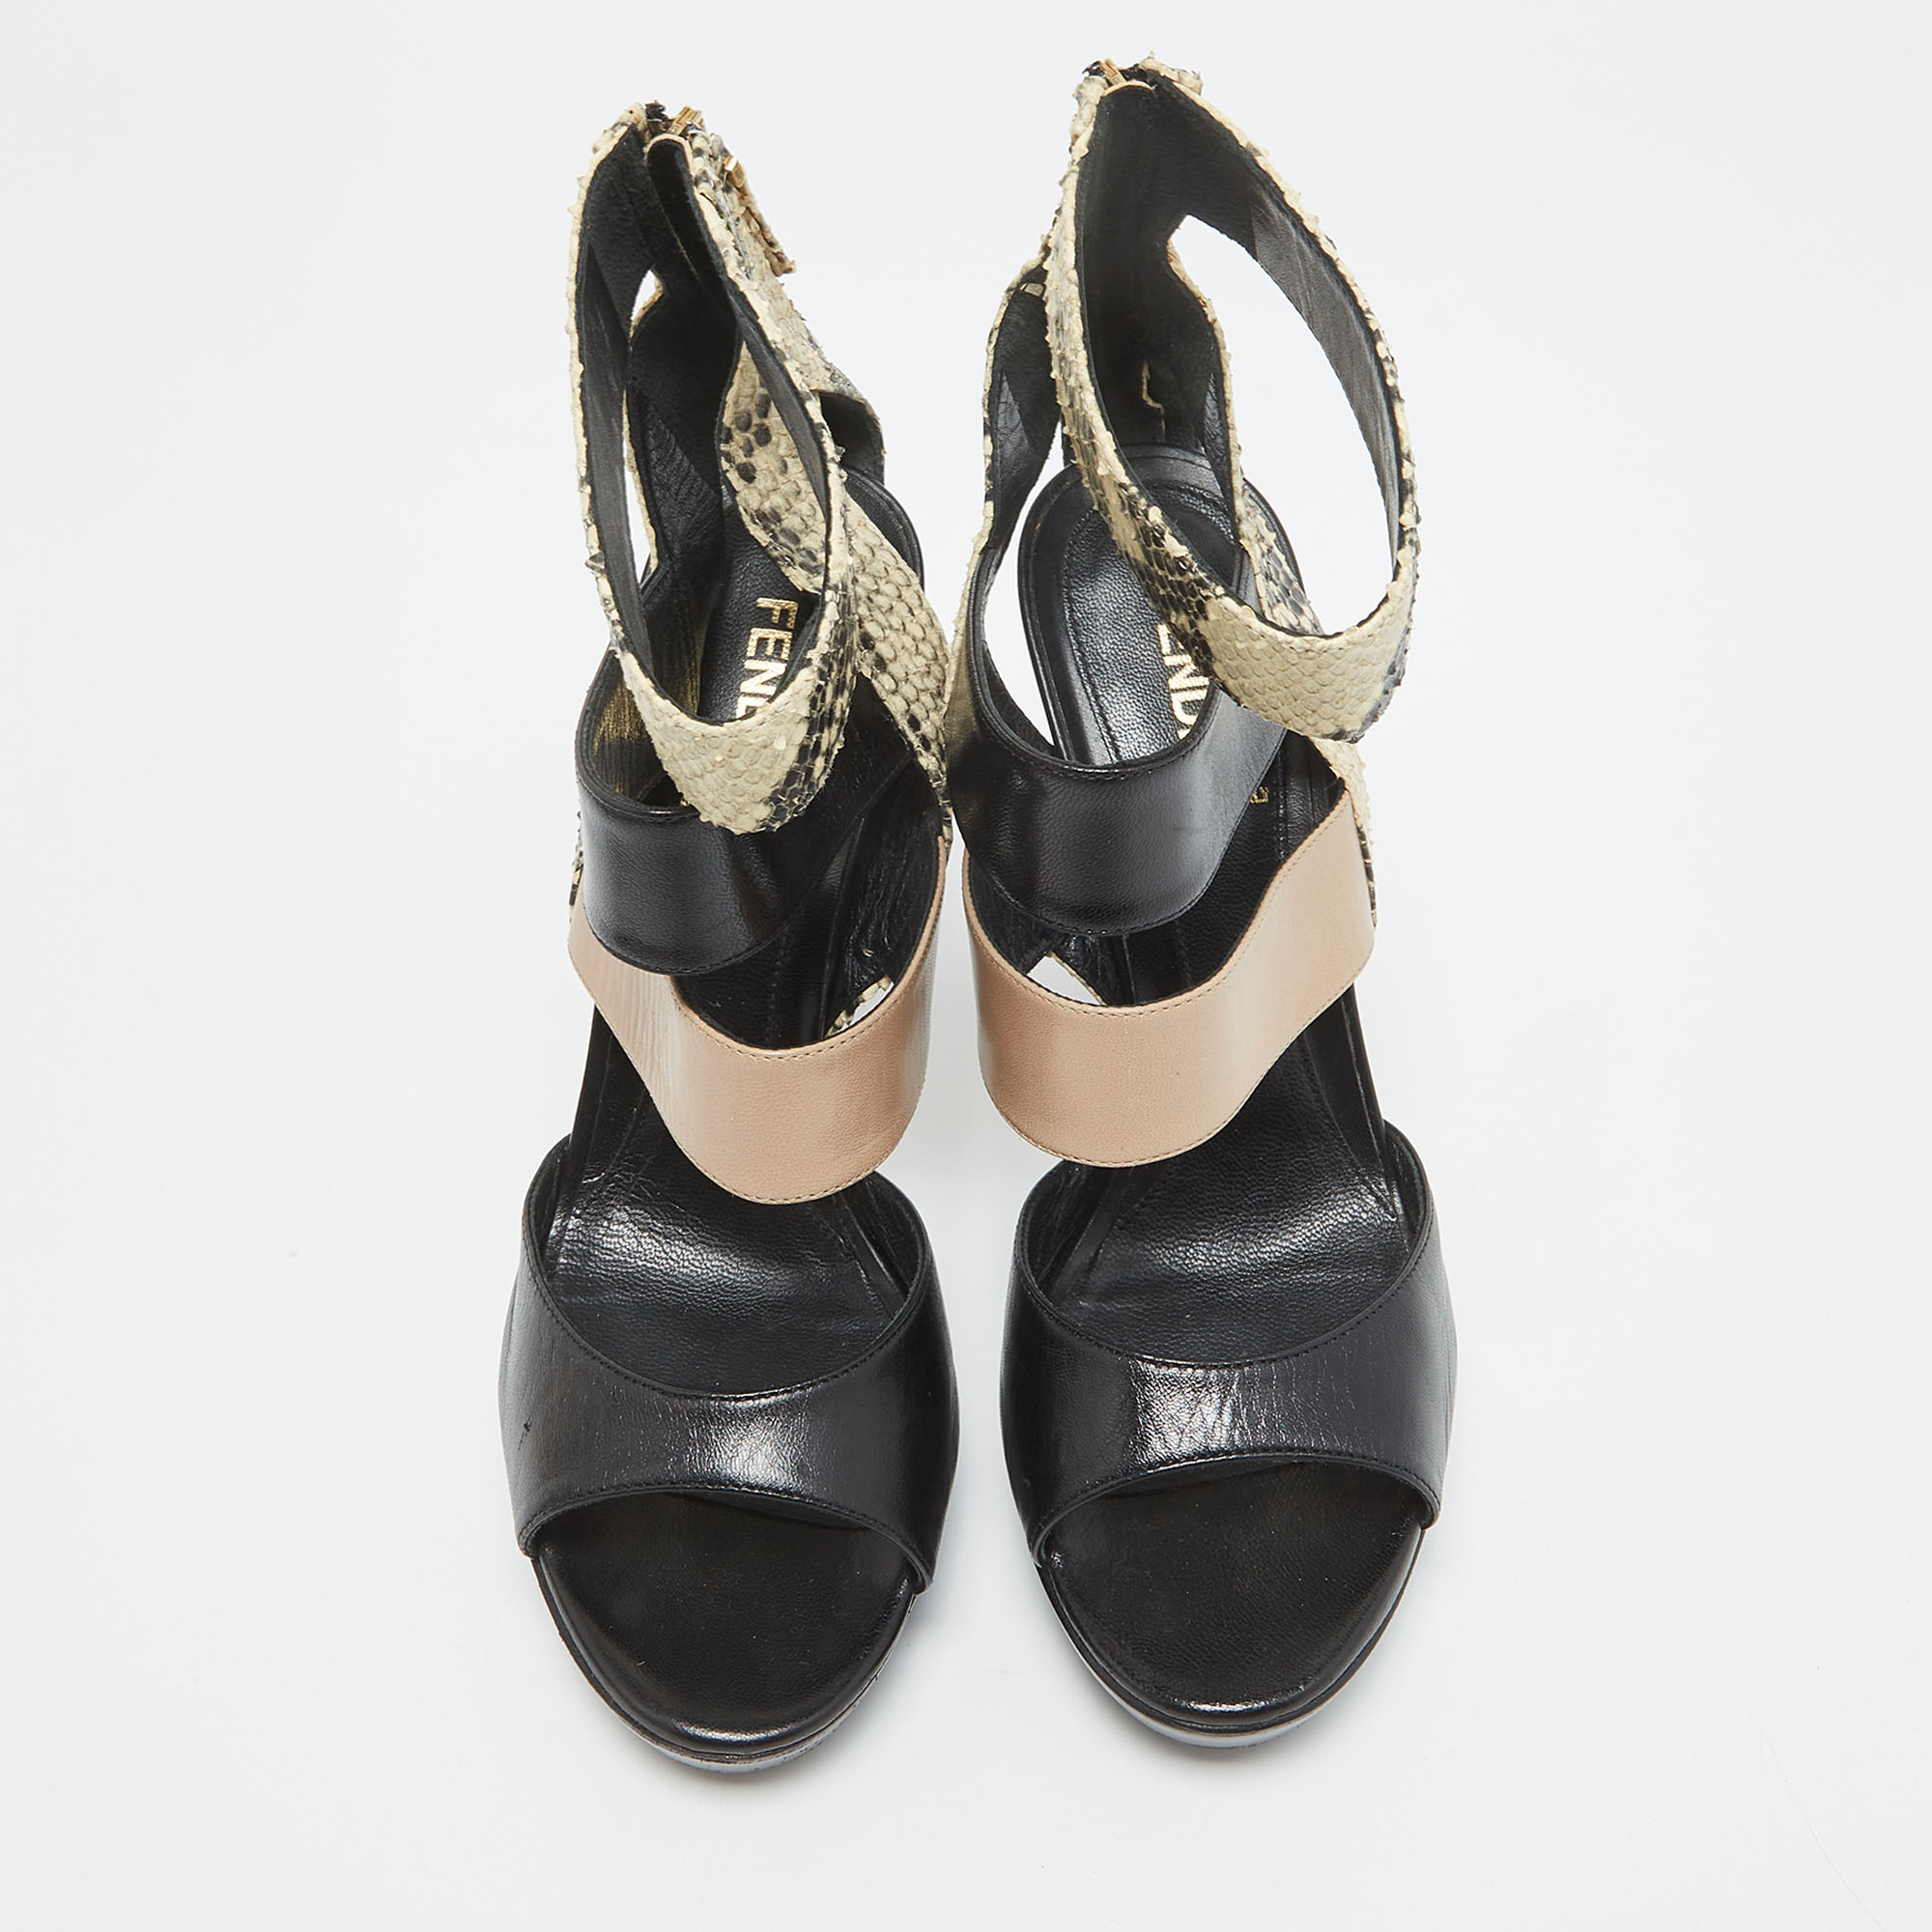 Fendi Tricolor Leather And Python Ankle Strap Platform Sandals Size 38